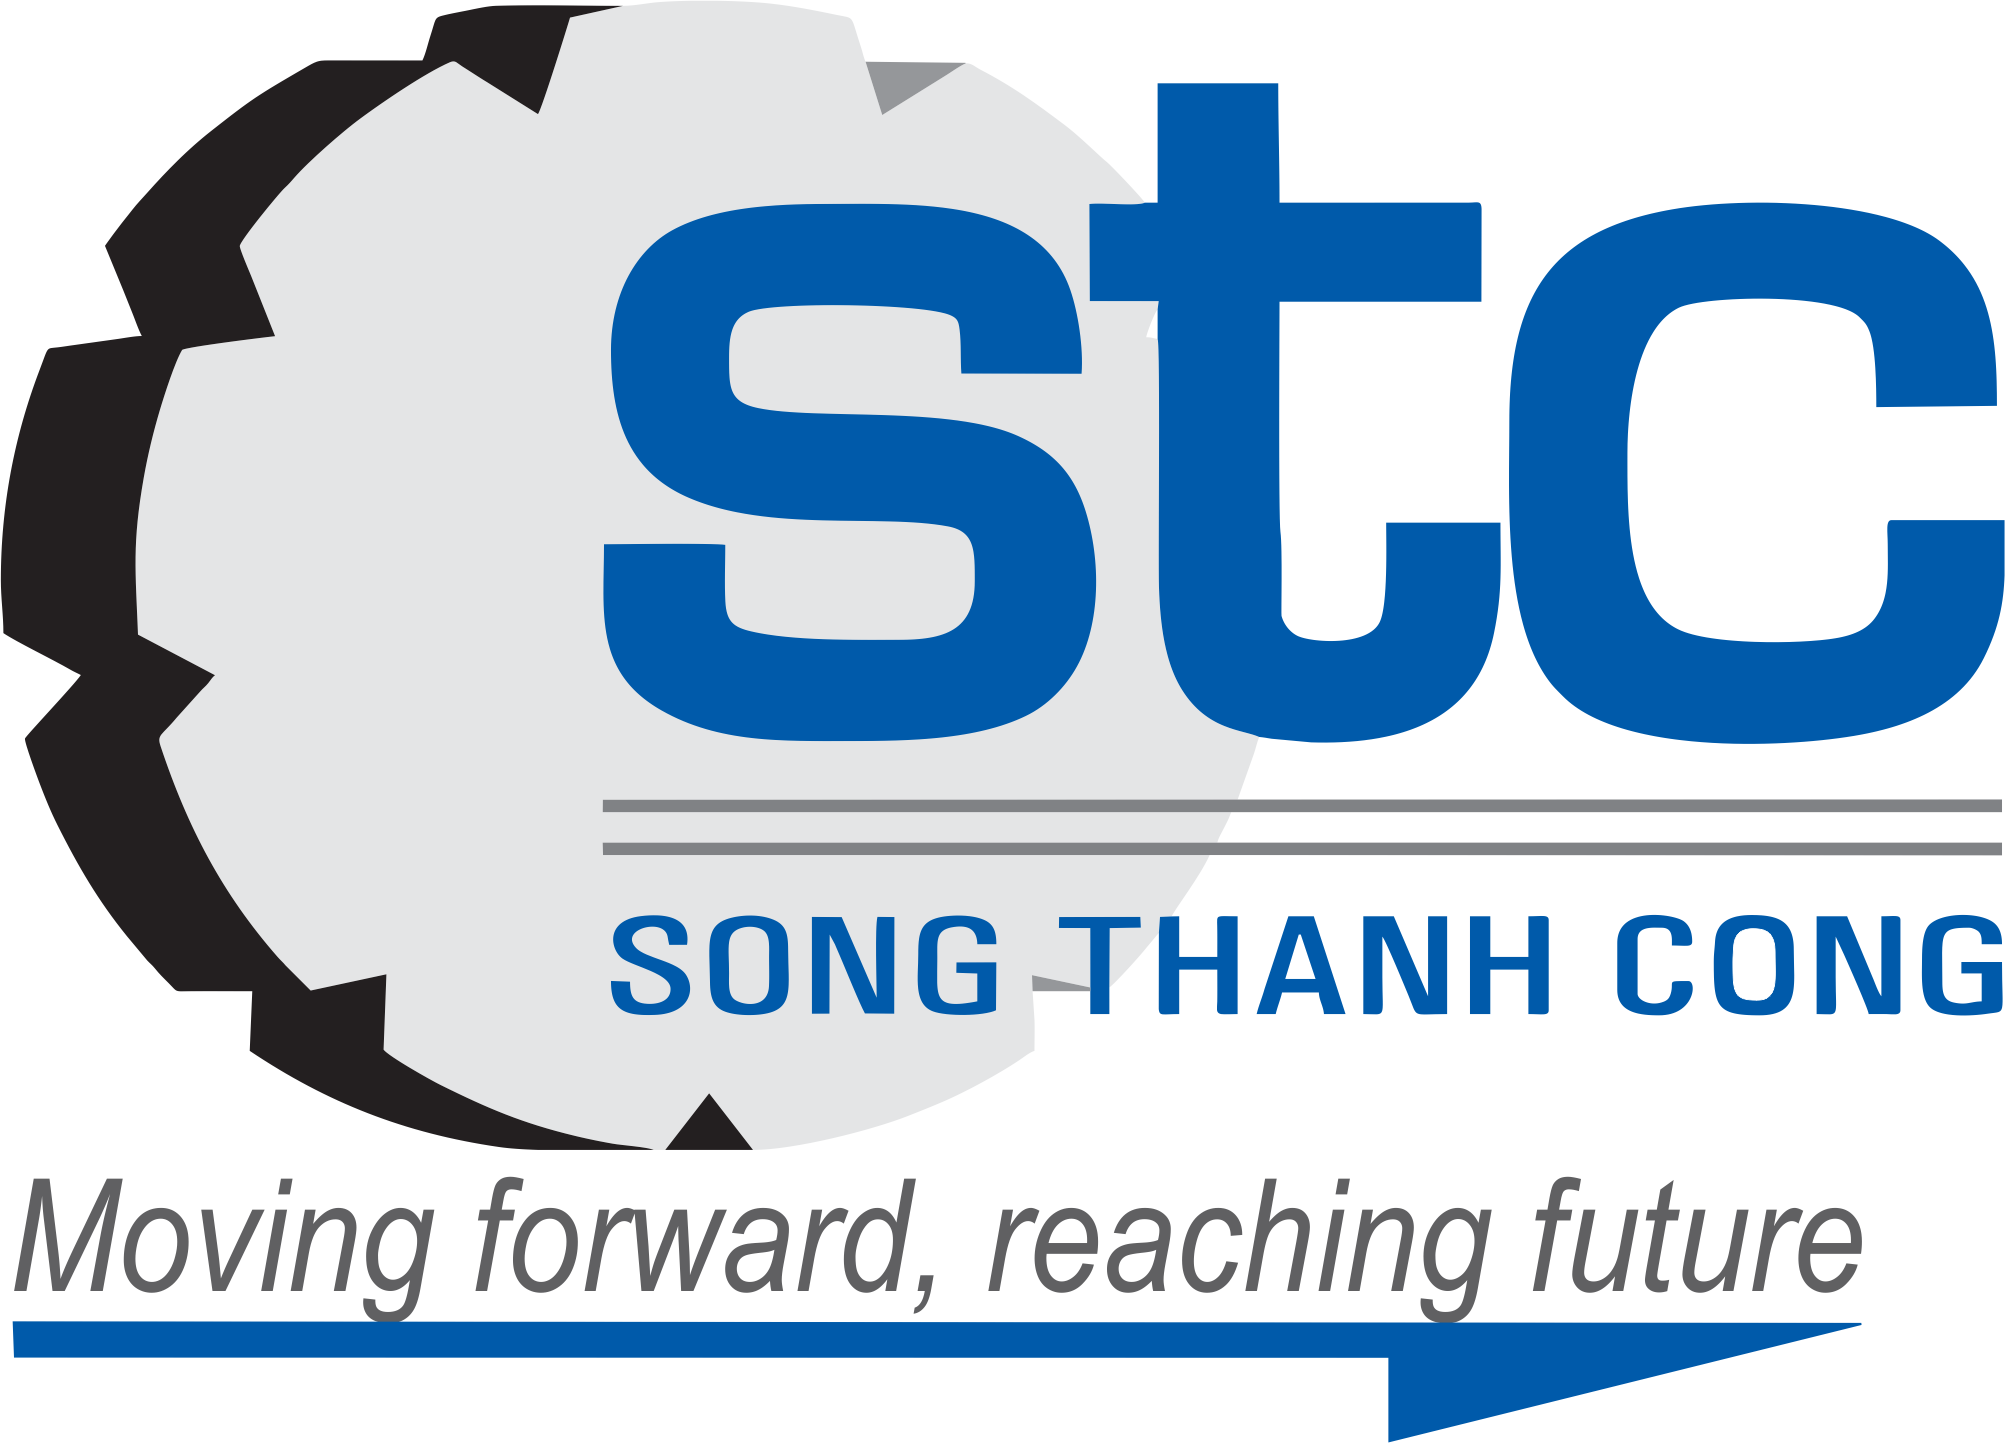 list-code-gia-san-06-thangs10-2020-stc-vietnam.png